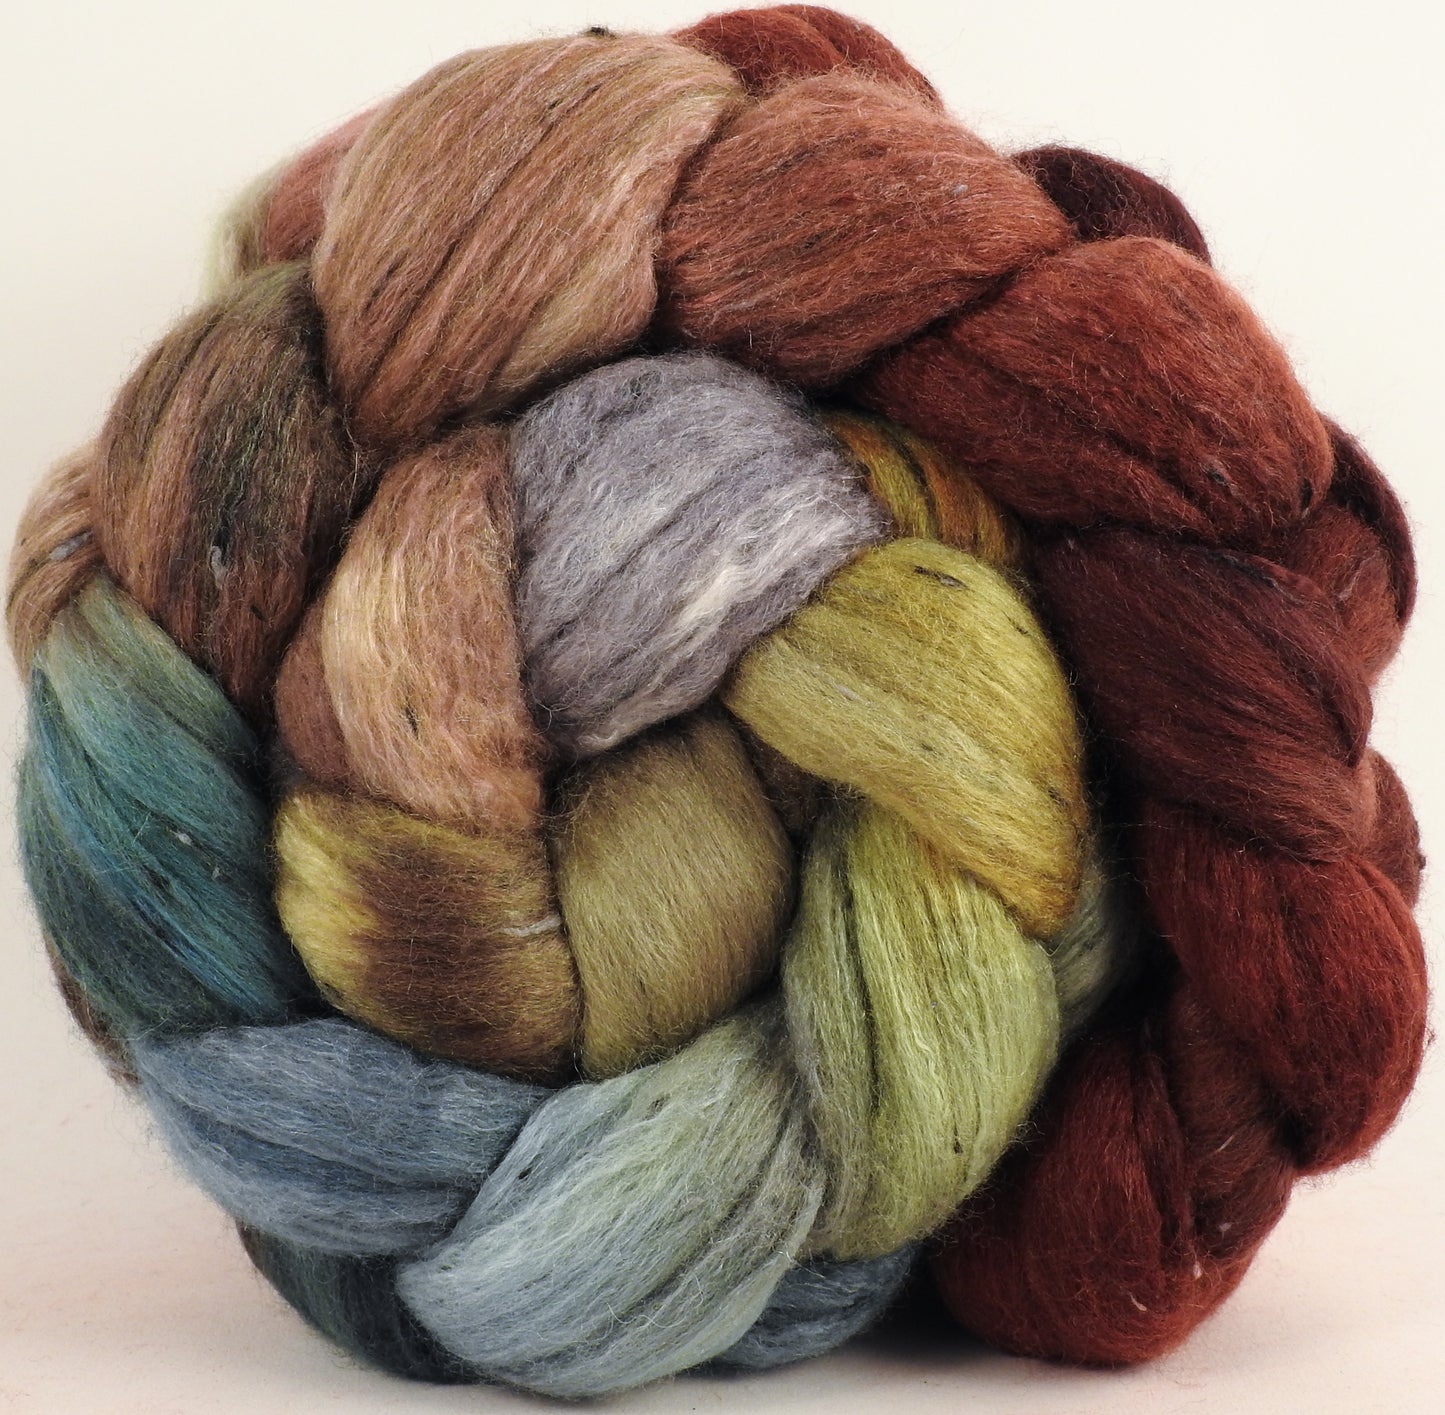 Batt in a Braid #49 - Winter Beech (5.5 oz) - Polwarth/ Mulberry Silk/ Tweed Blend (50/25/25)